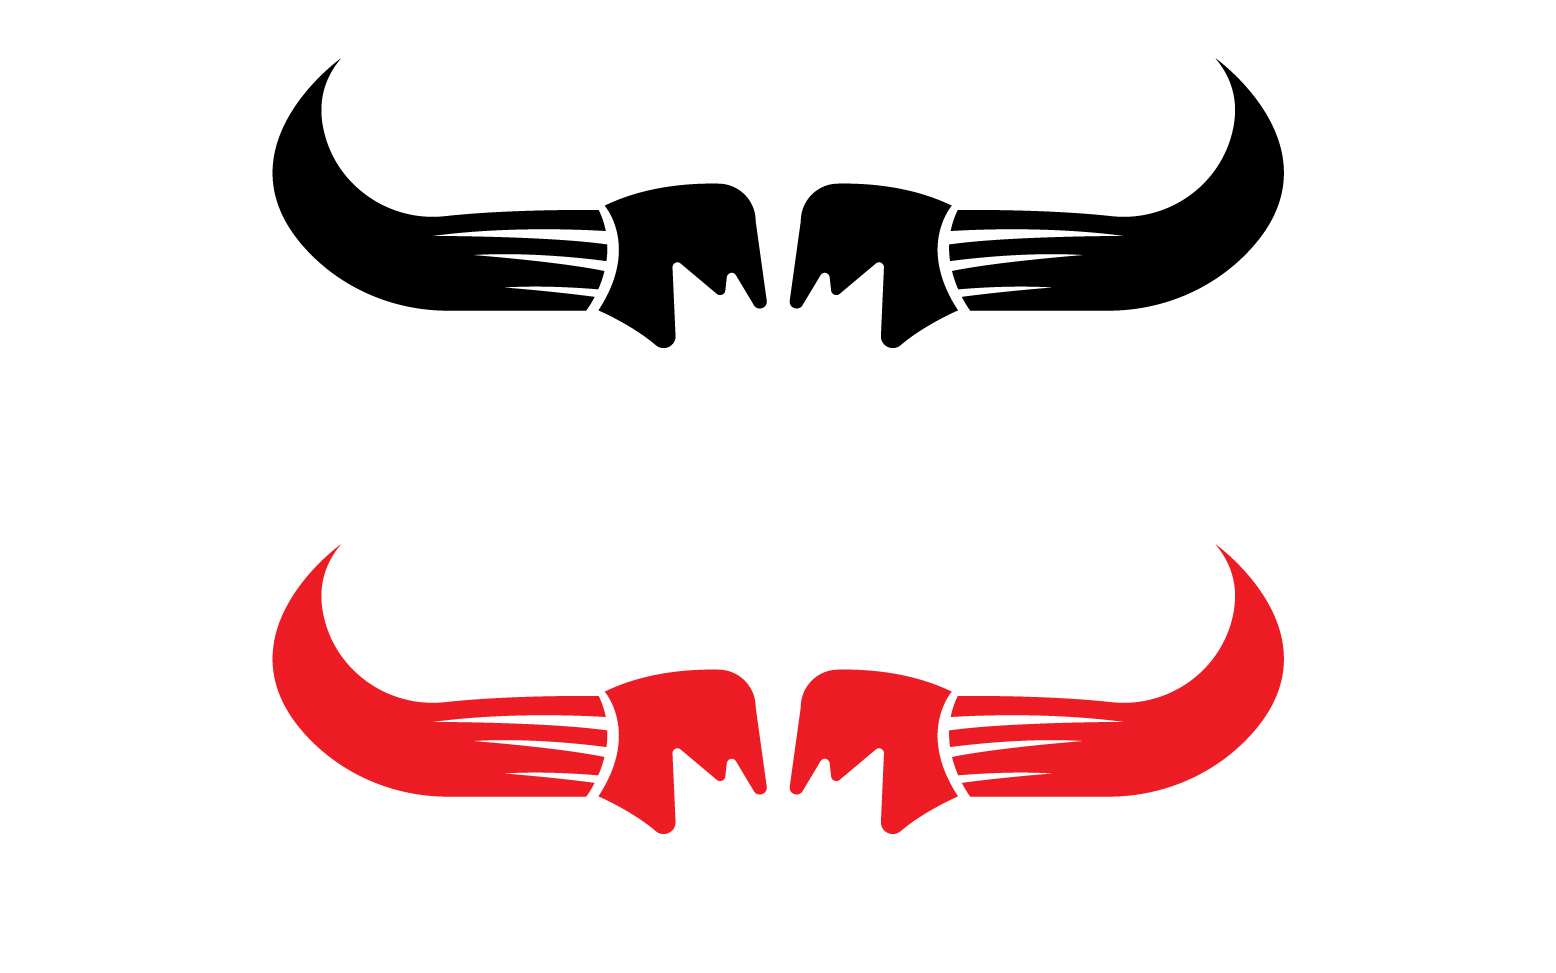 Bull and buffalo head cow animal mascot logo design vector version 1